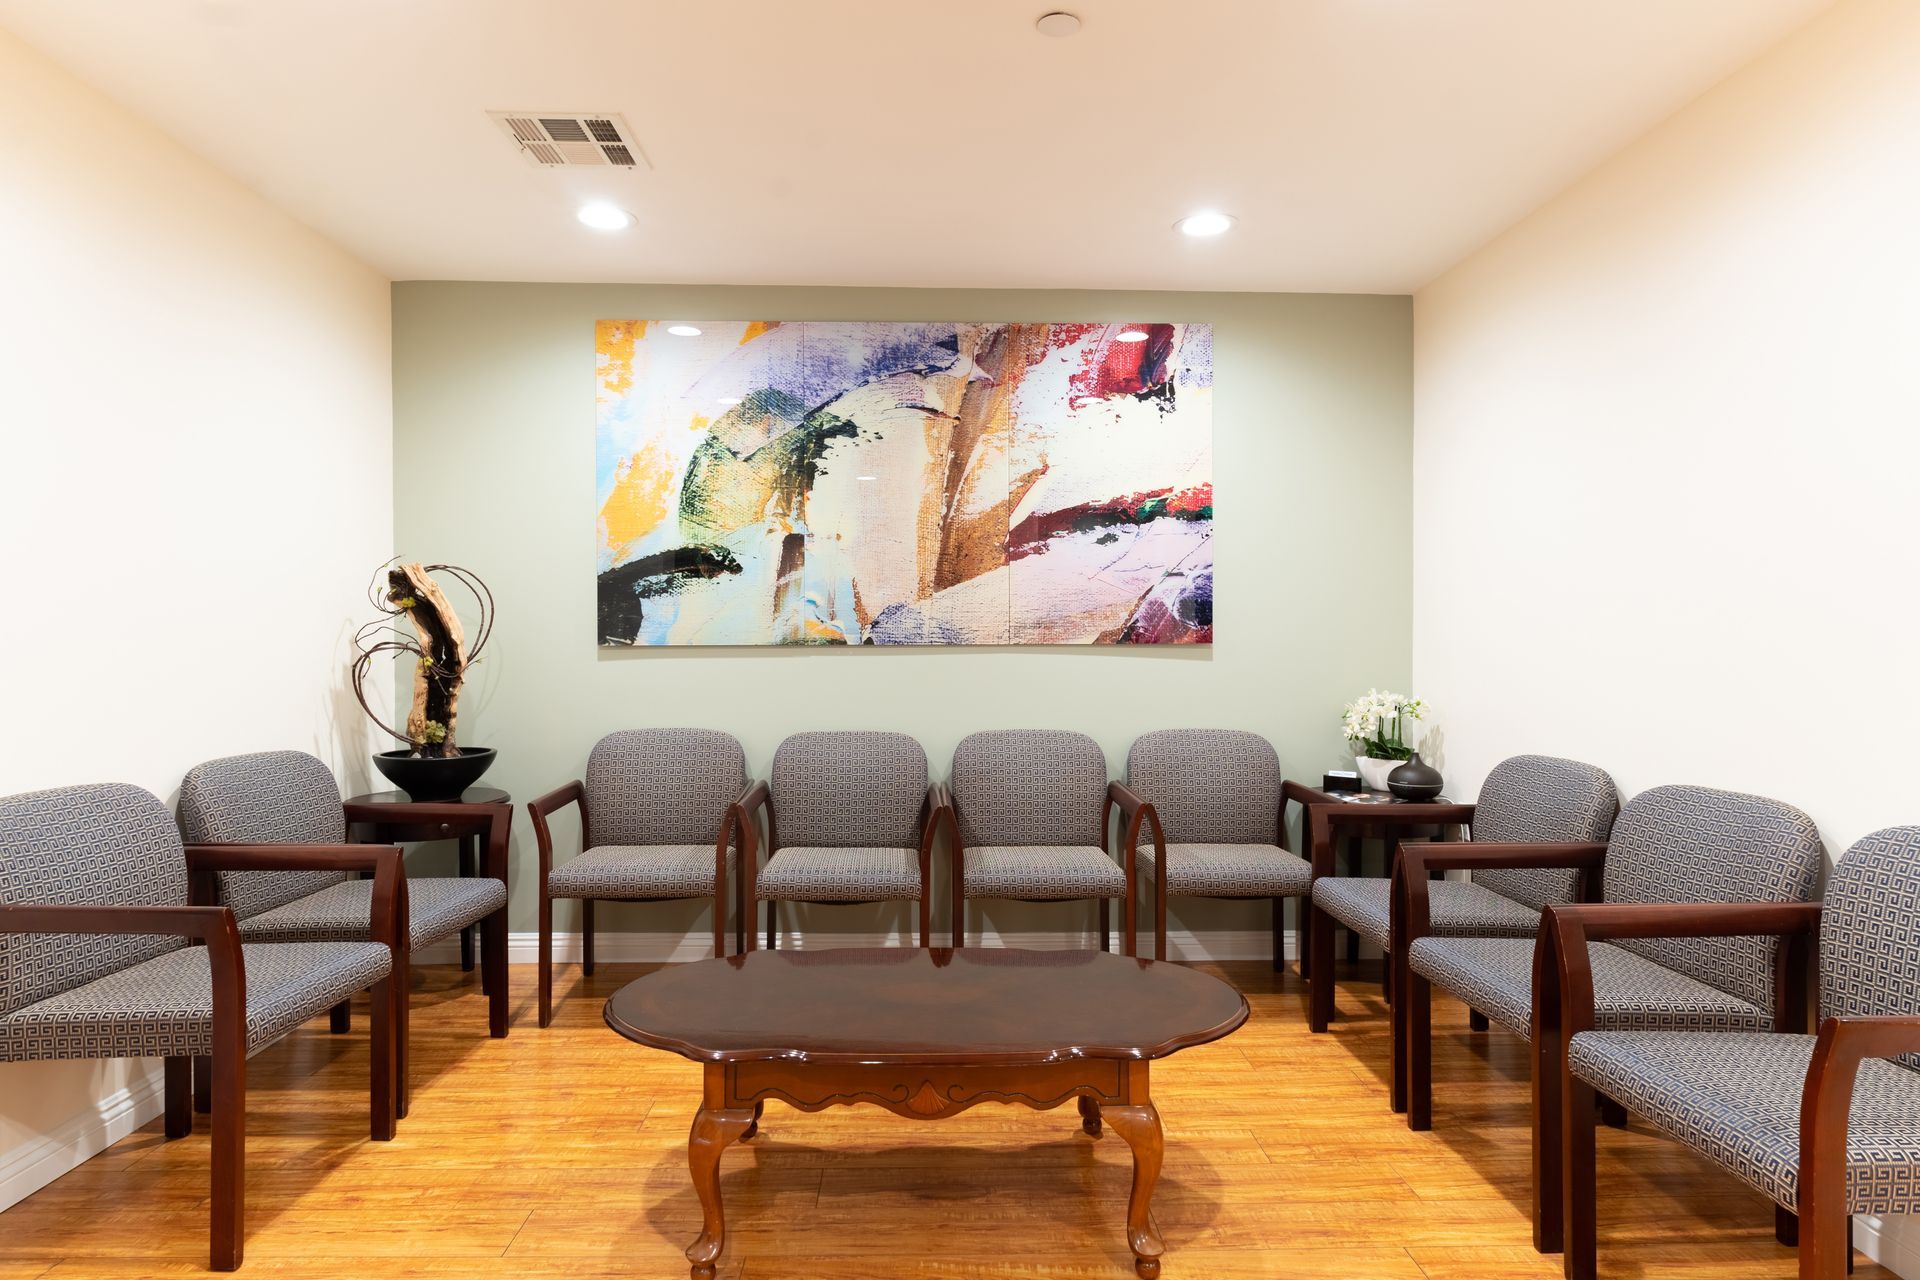 Encino Dental Waiting Room